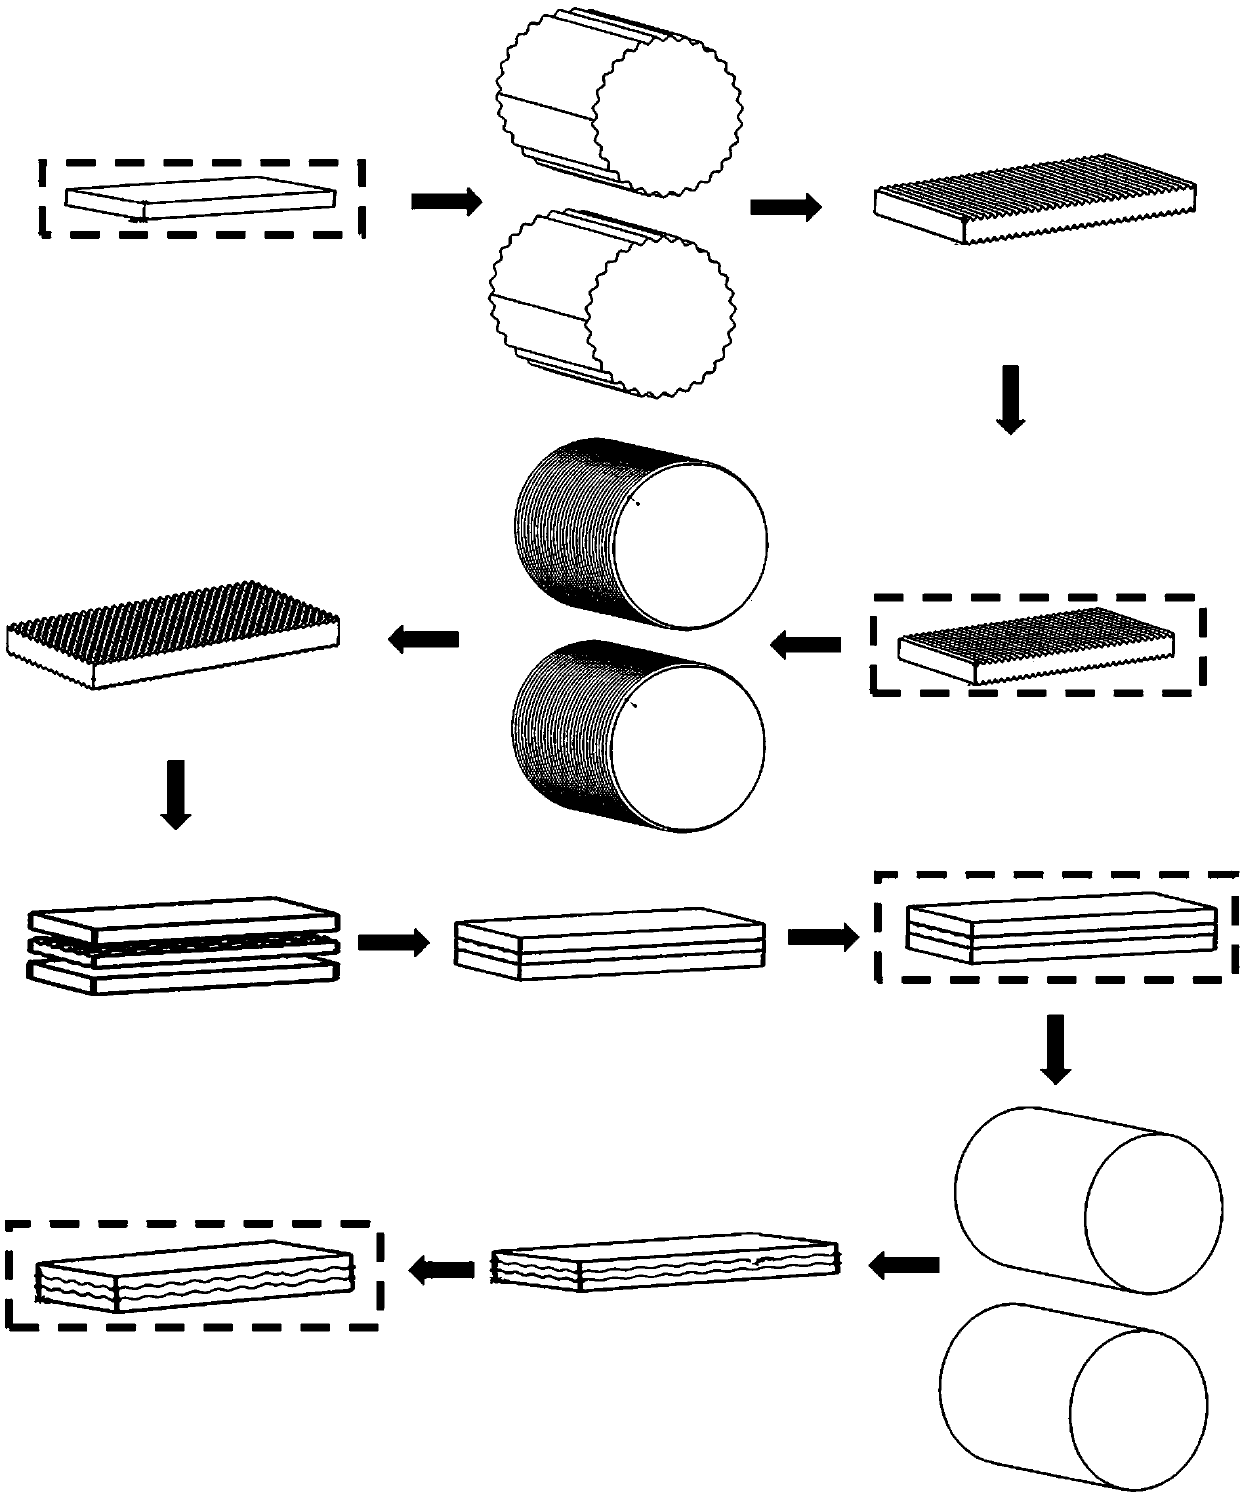 Method for preparing aluminum-magnesium-aluminum three-layer metal composite plate by prefabricating crossed corrugated interface